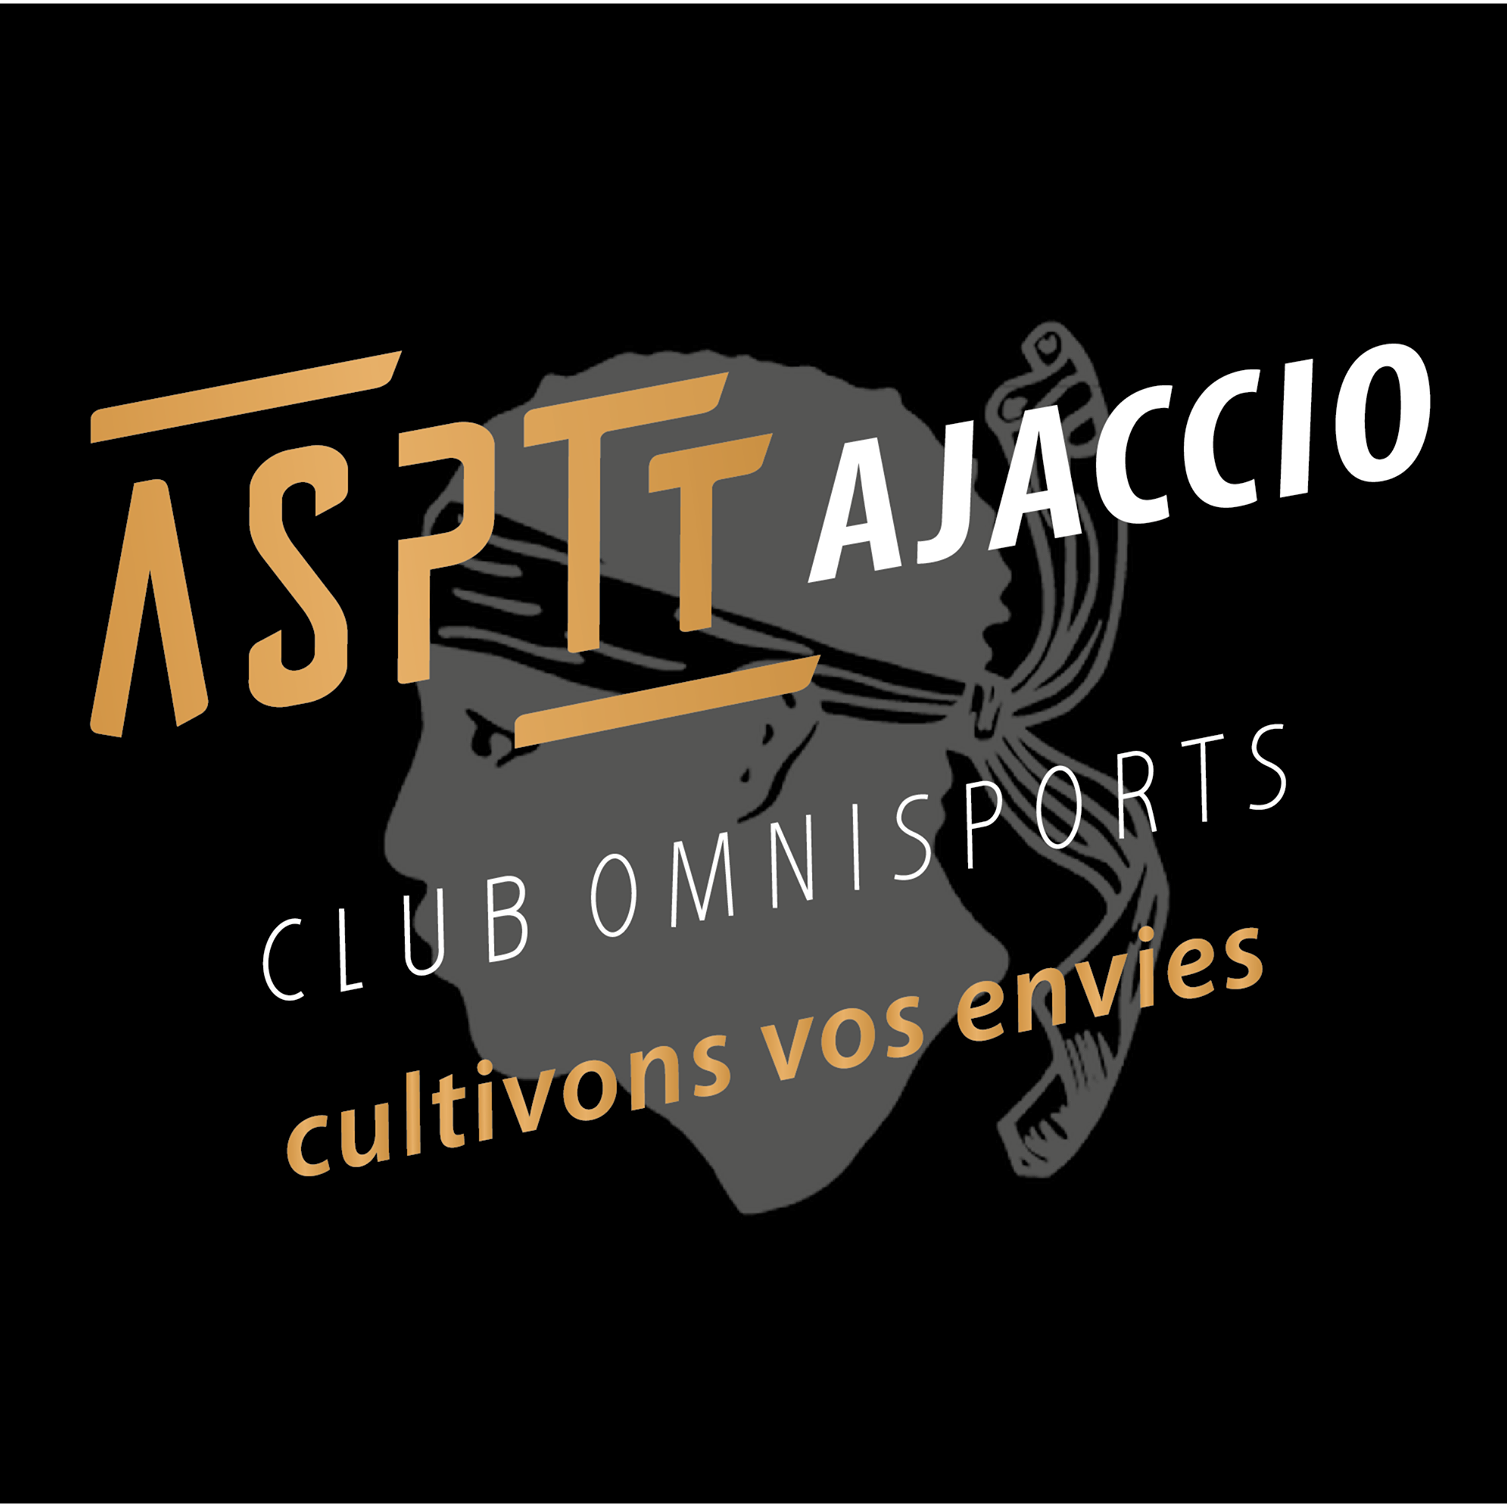 Asptt Ajaccio Association Sportive Omni stade et complexe sportif